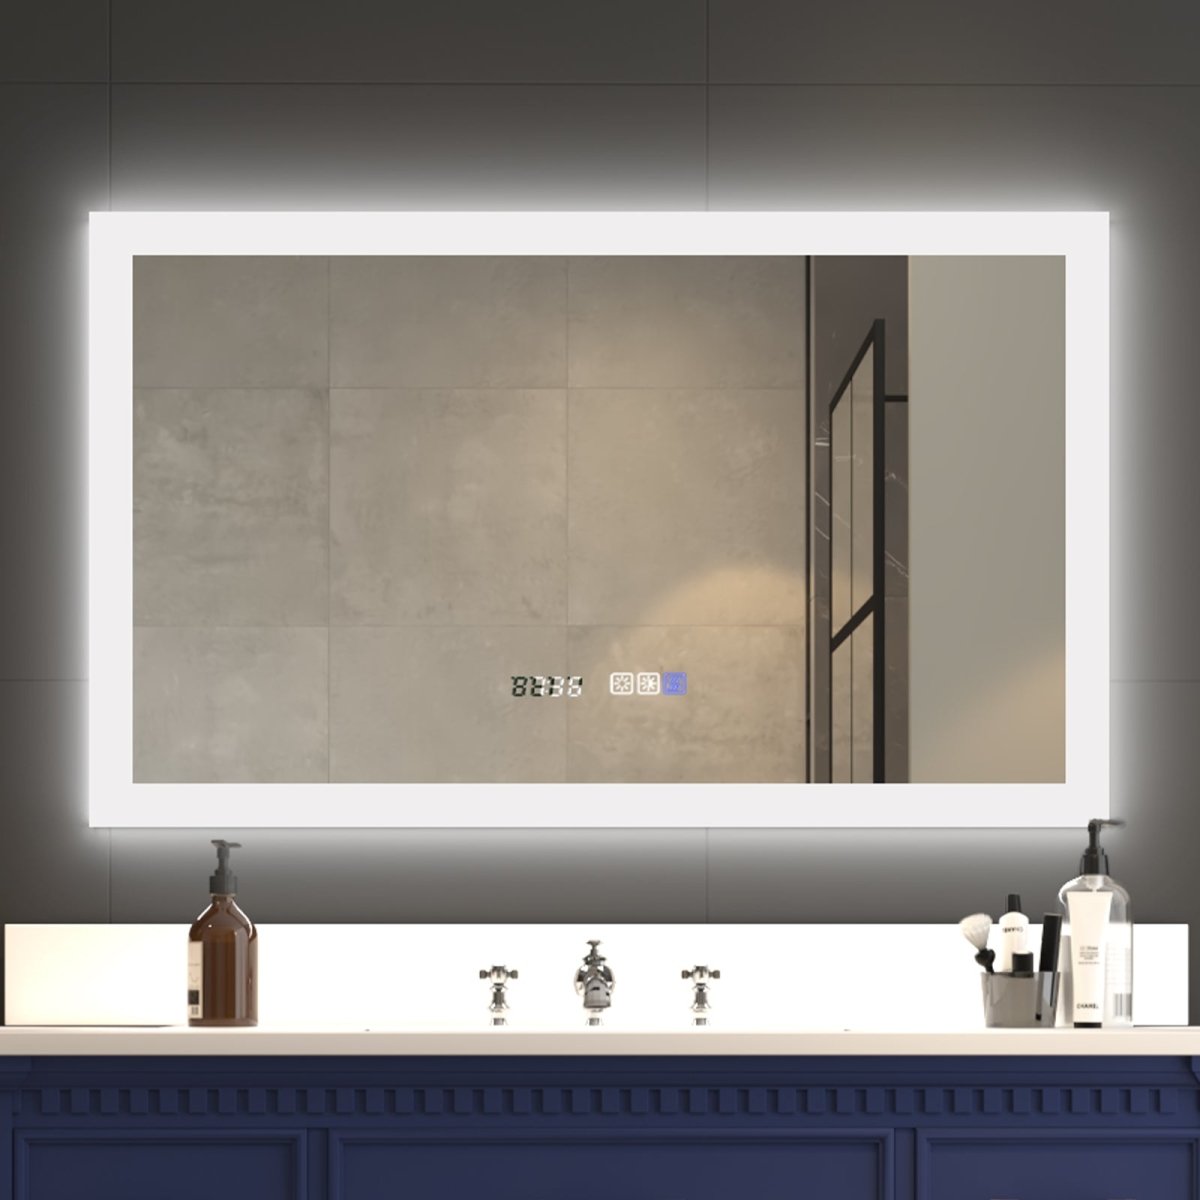 Ascend-M2 40" W x 24" H illuminated Led Bathroom Mirror for Makeup Vanity Room Back / Front Light